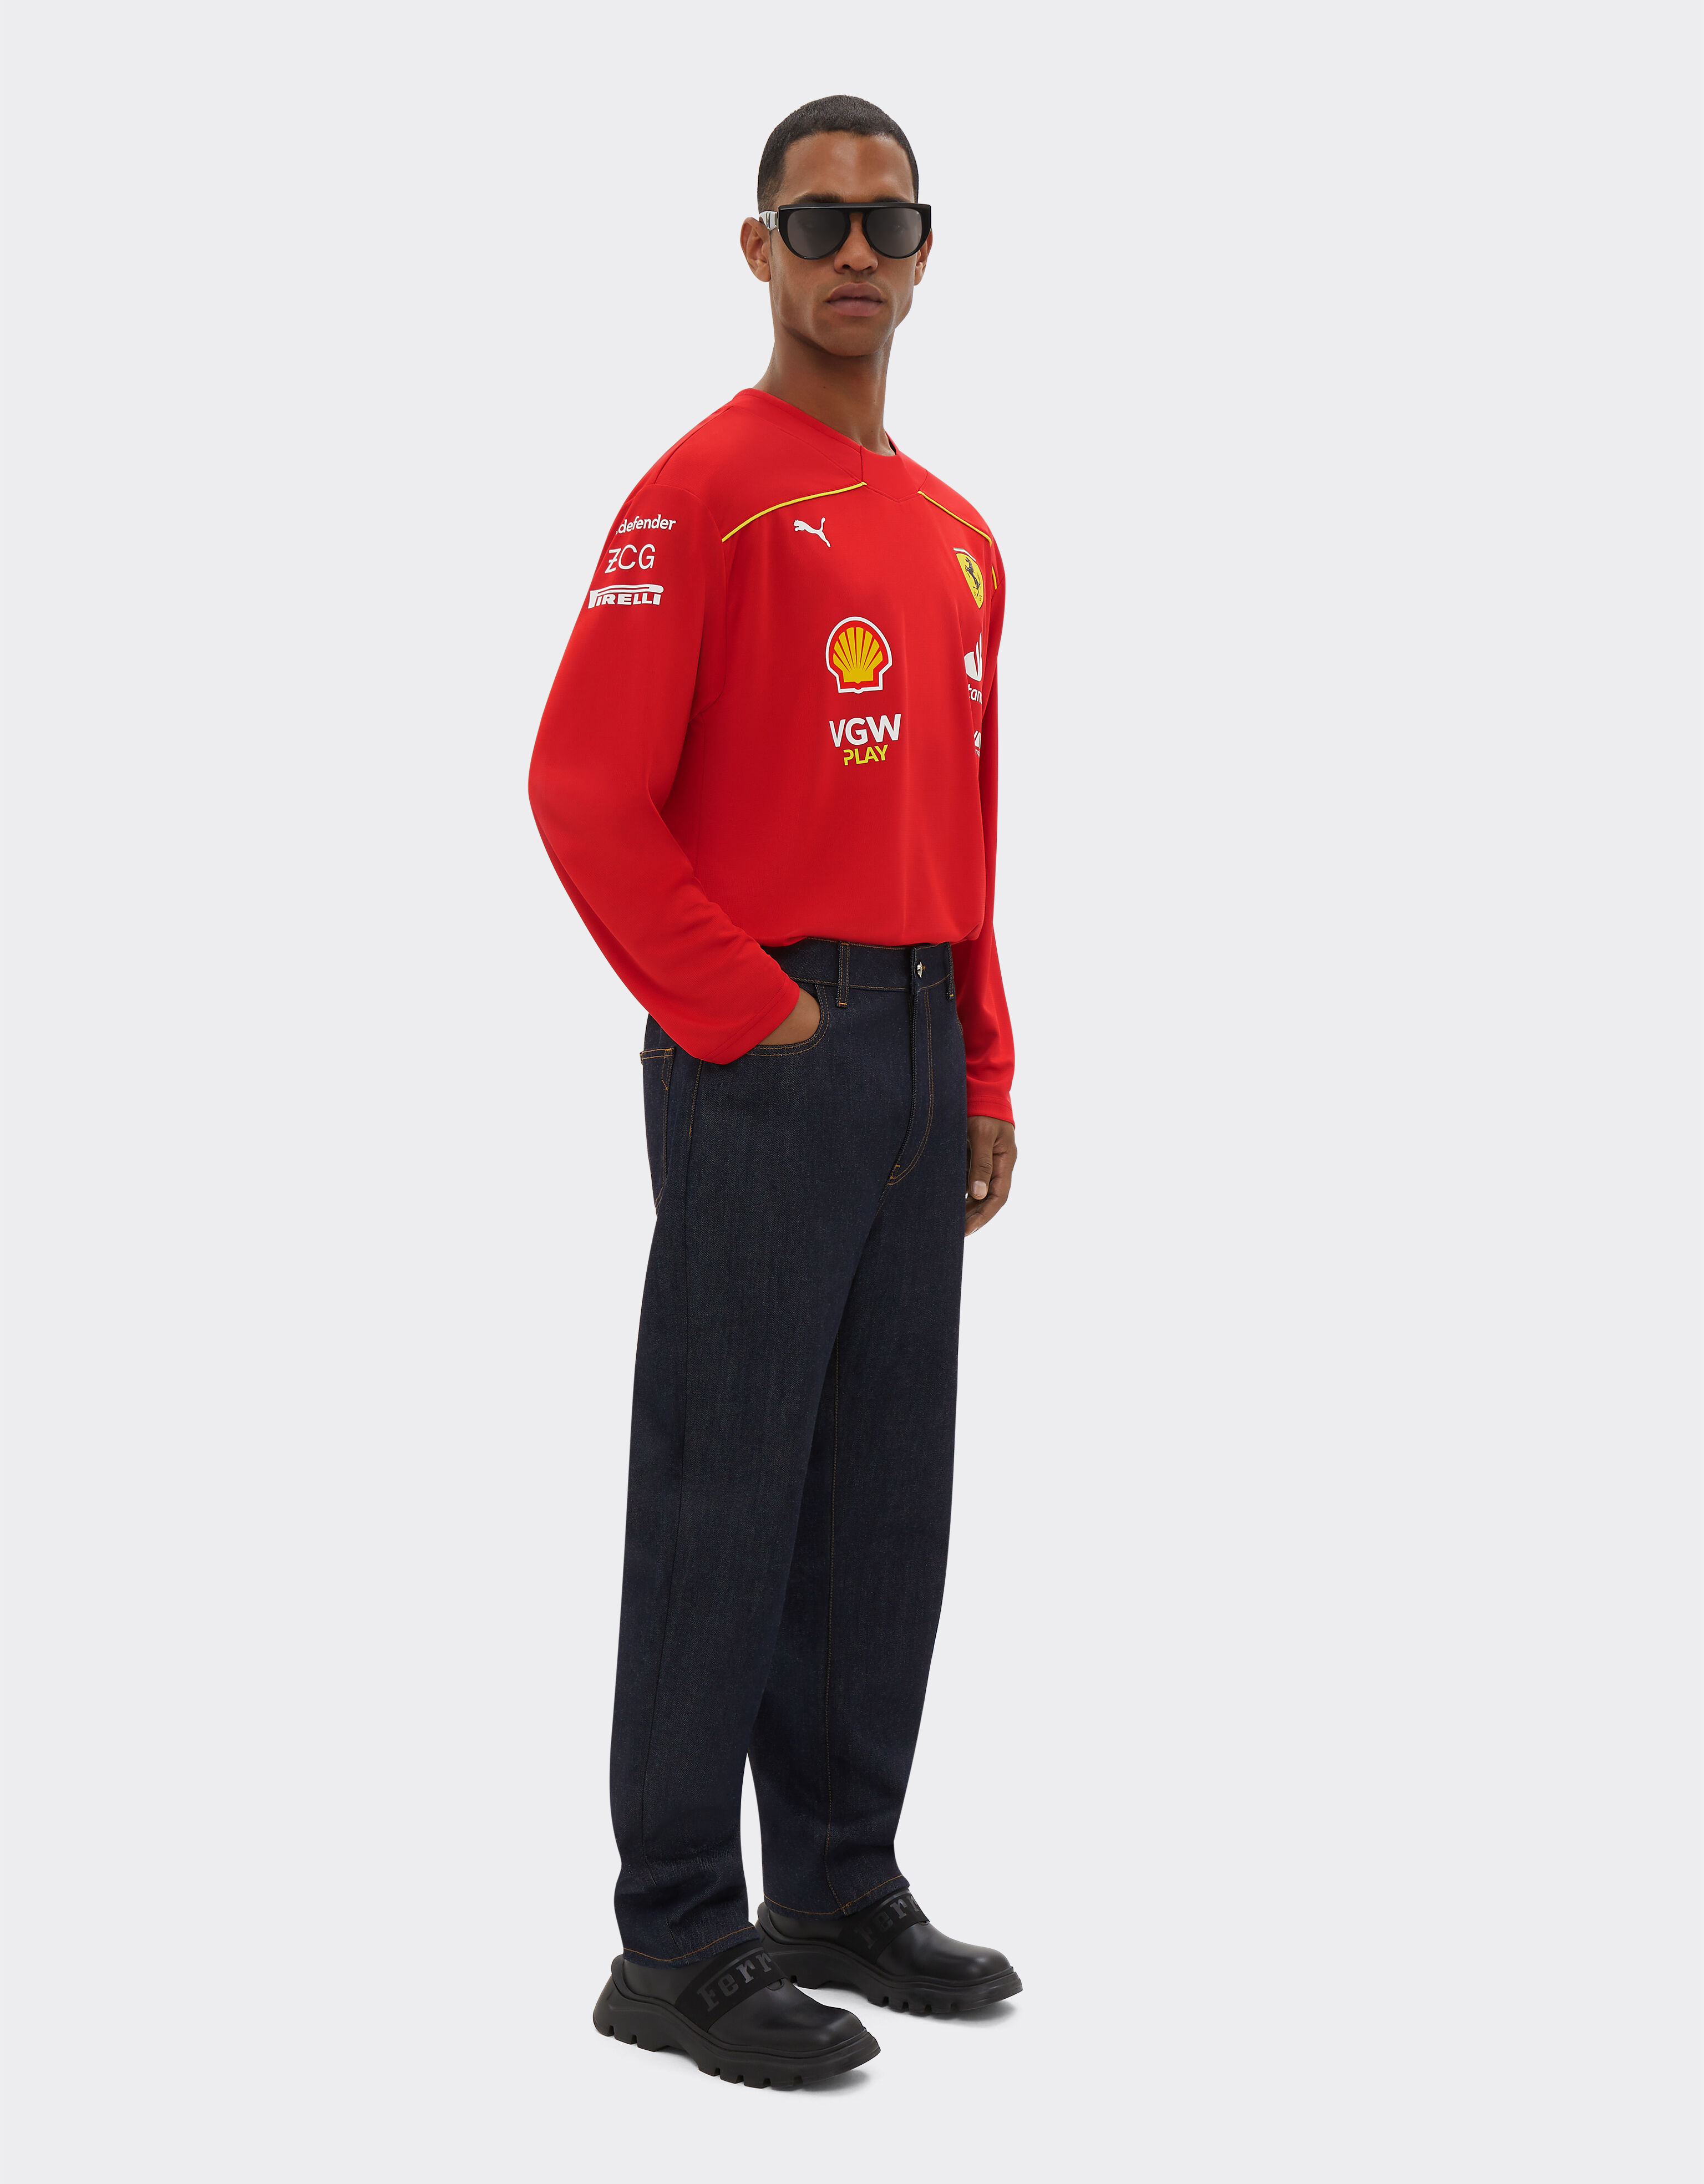 Ferrari Camiseta de hockey Puma de Sainz para la Scuderia Ferrari - Edición especial Canadá Rosso Corsa F1337f